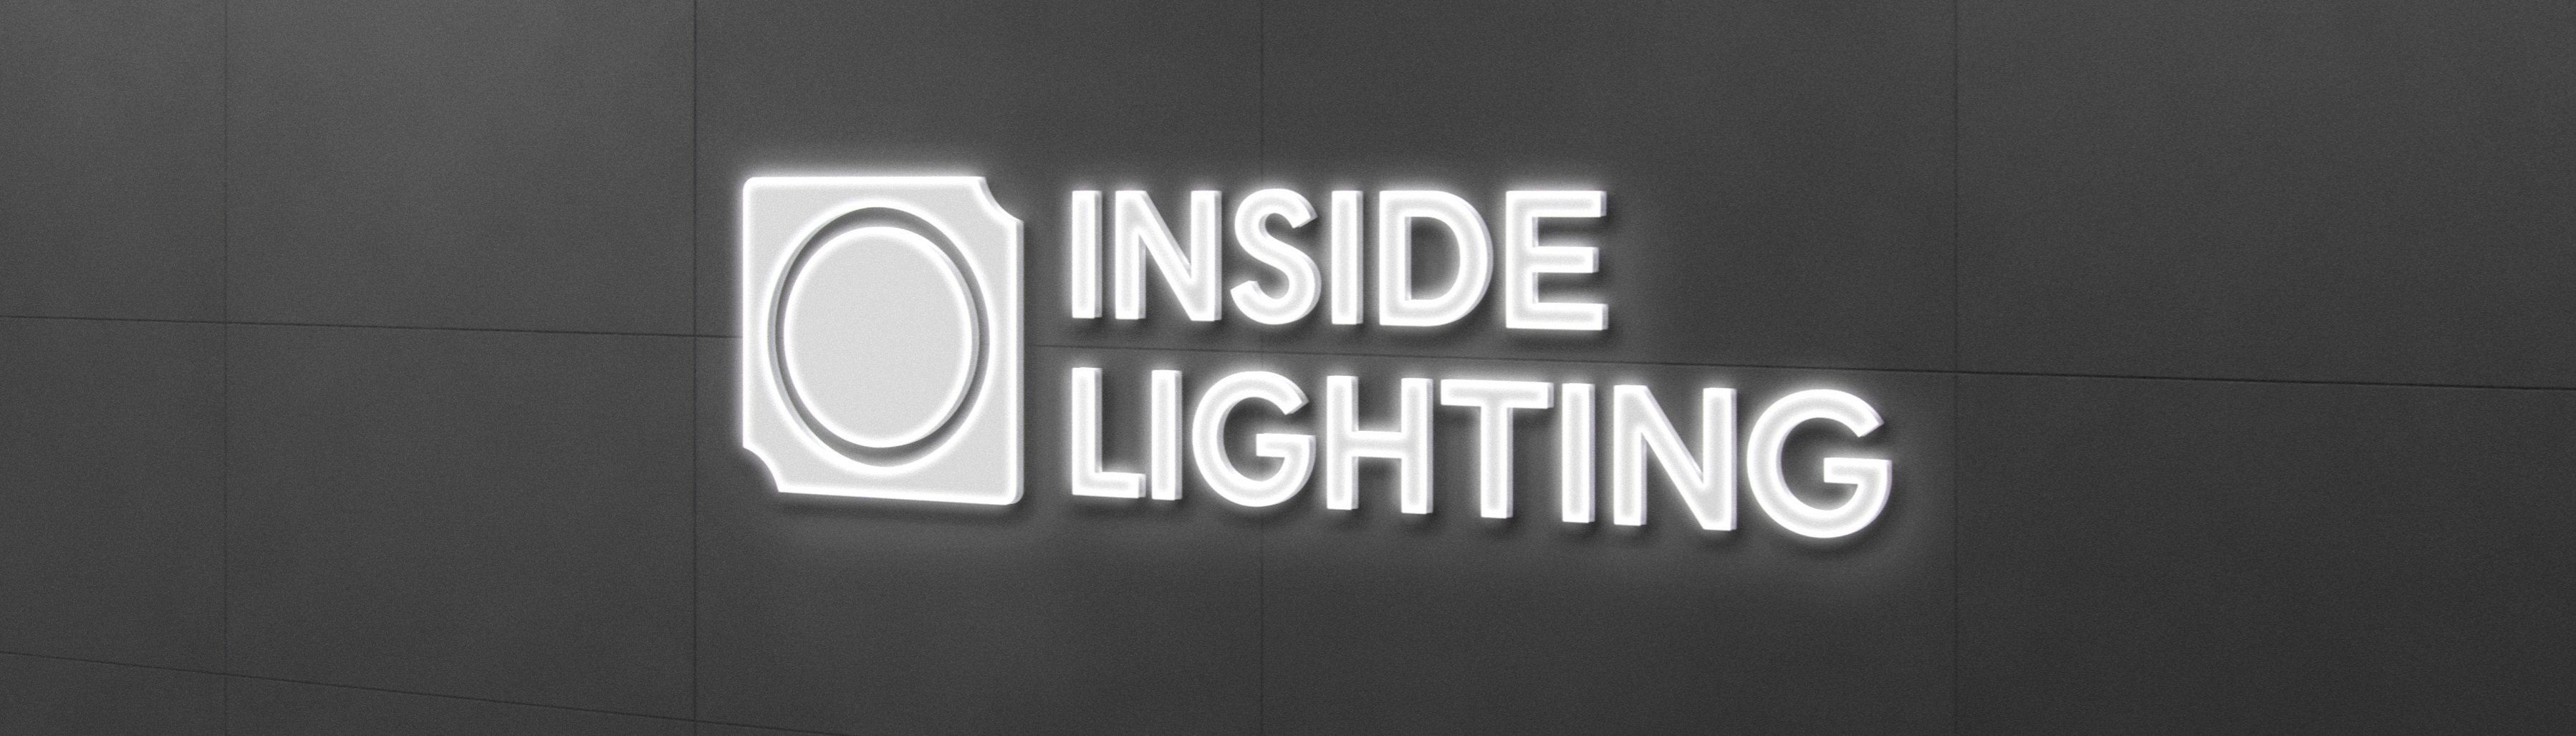 inside-lighting-logo-on-wall.jpg